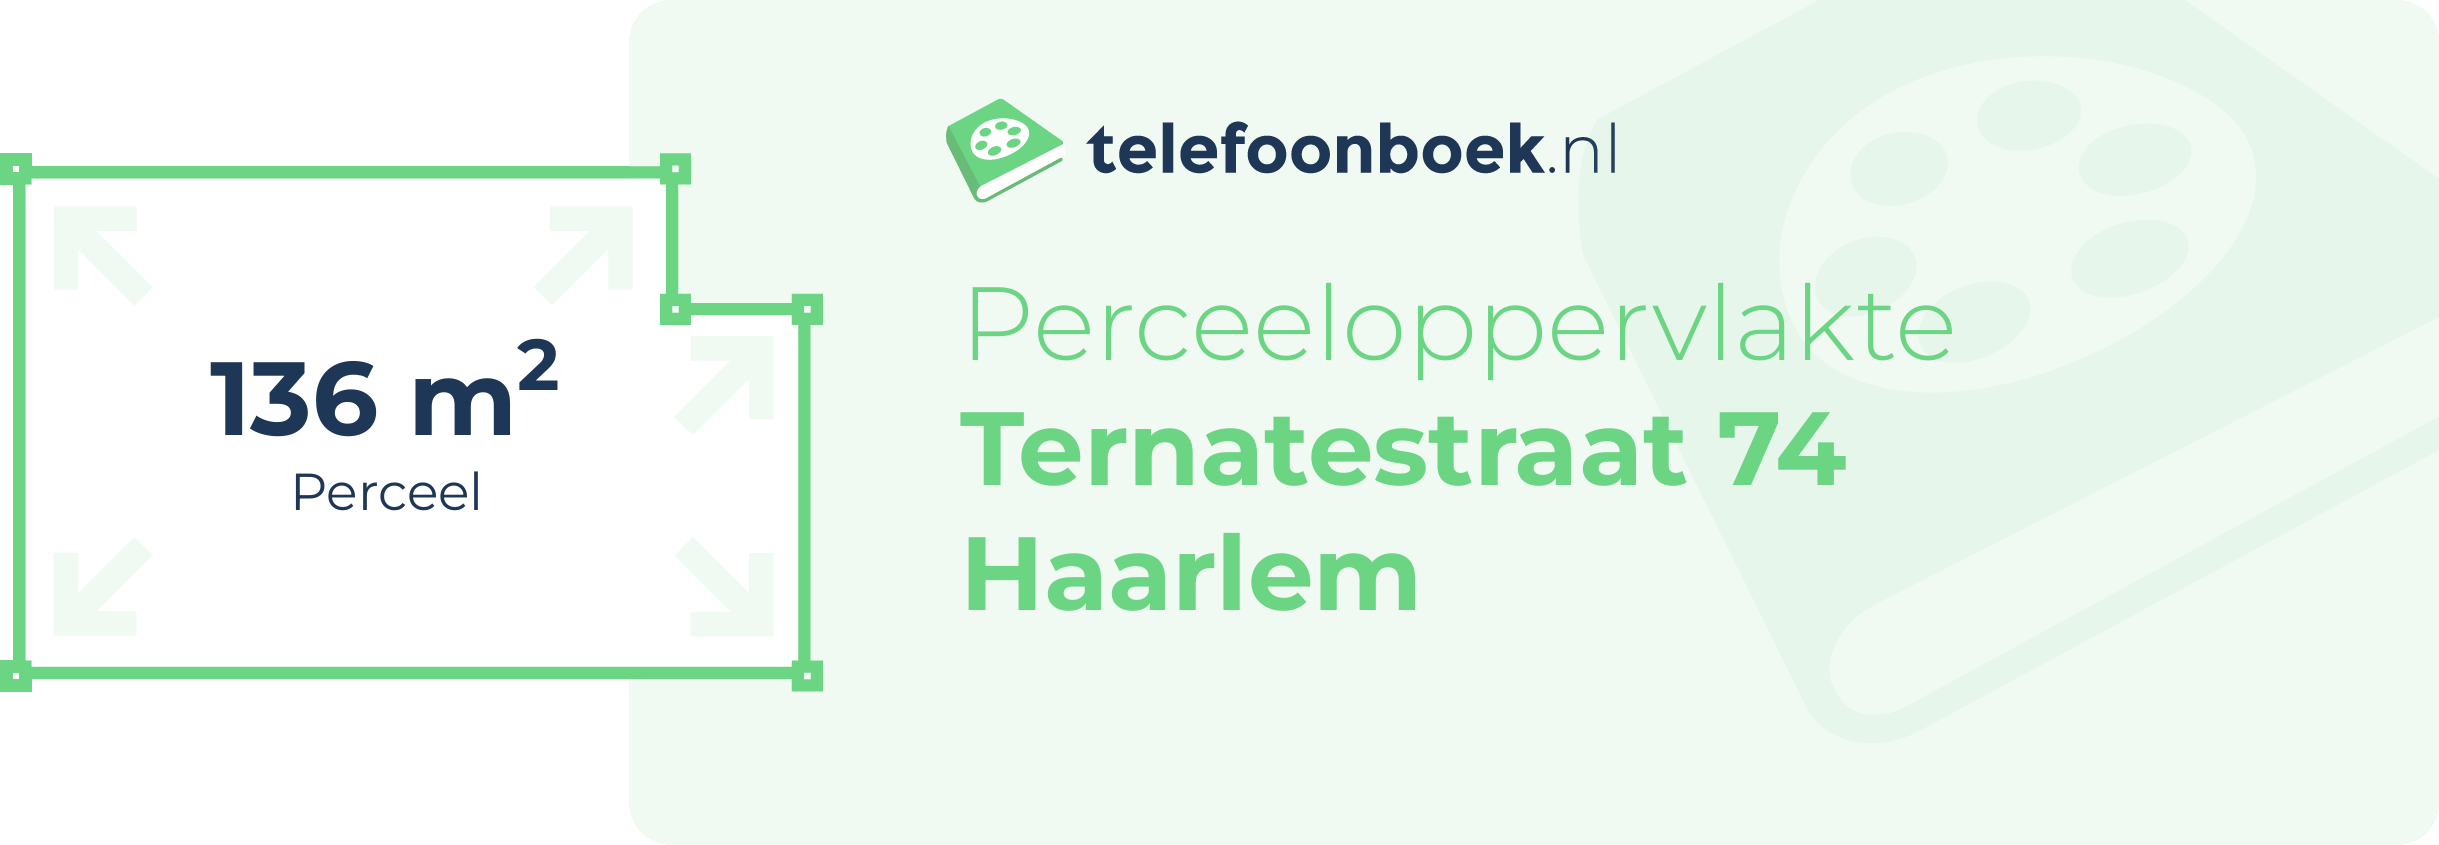 Perceeloppervlakte Ternatestraat 74 Haarlem